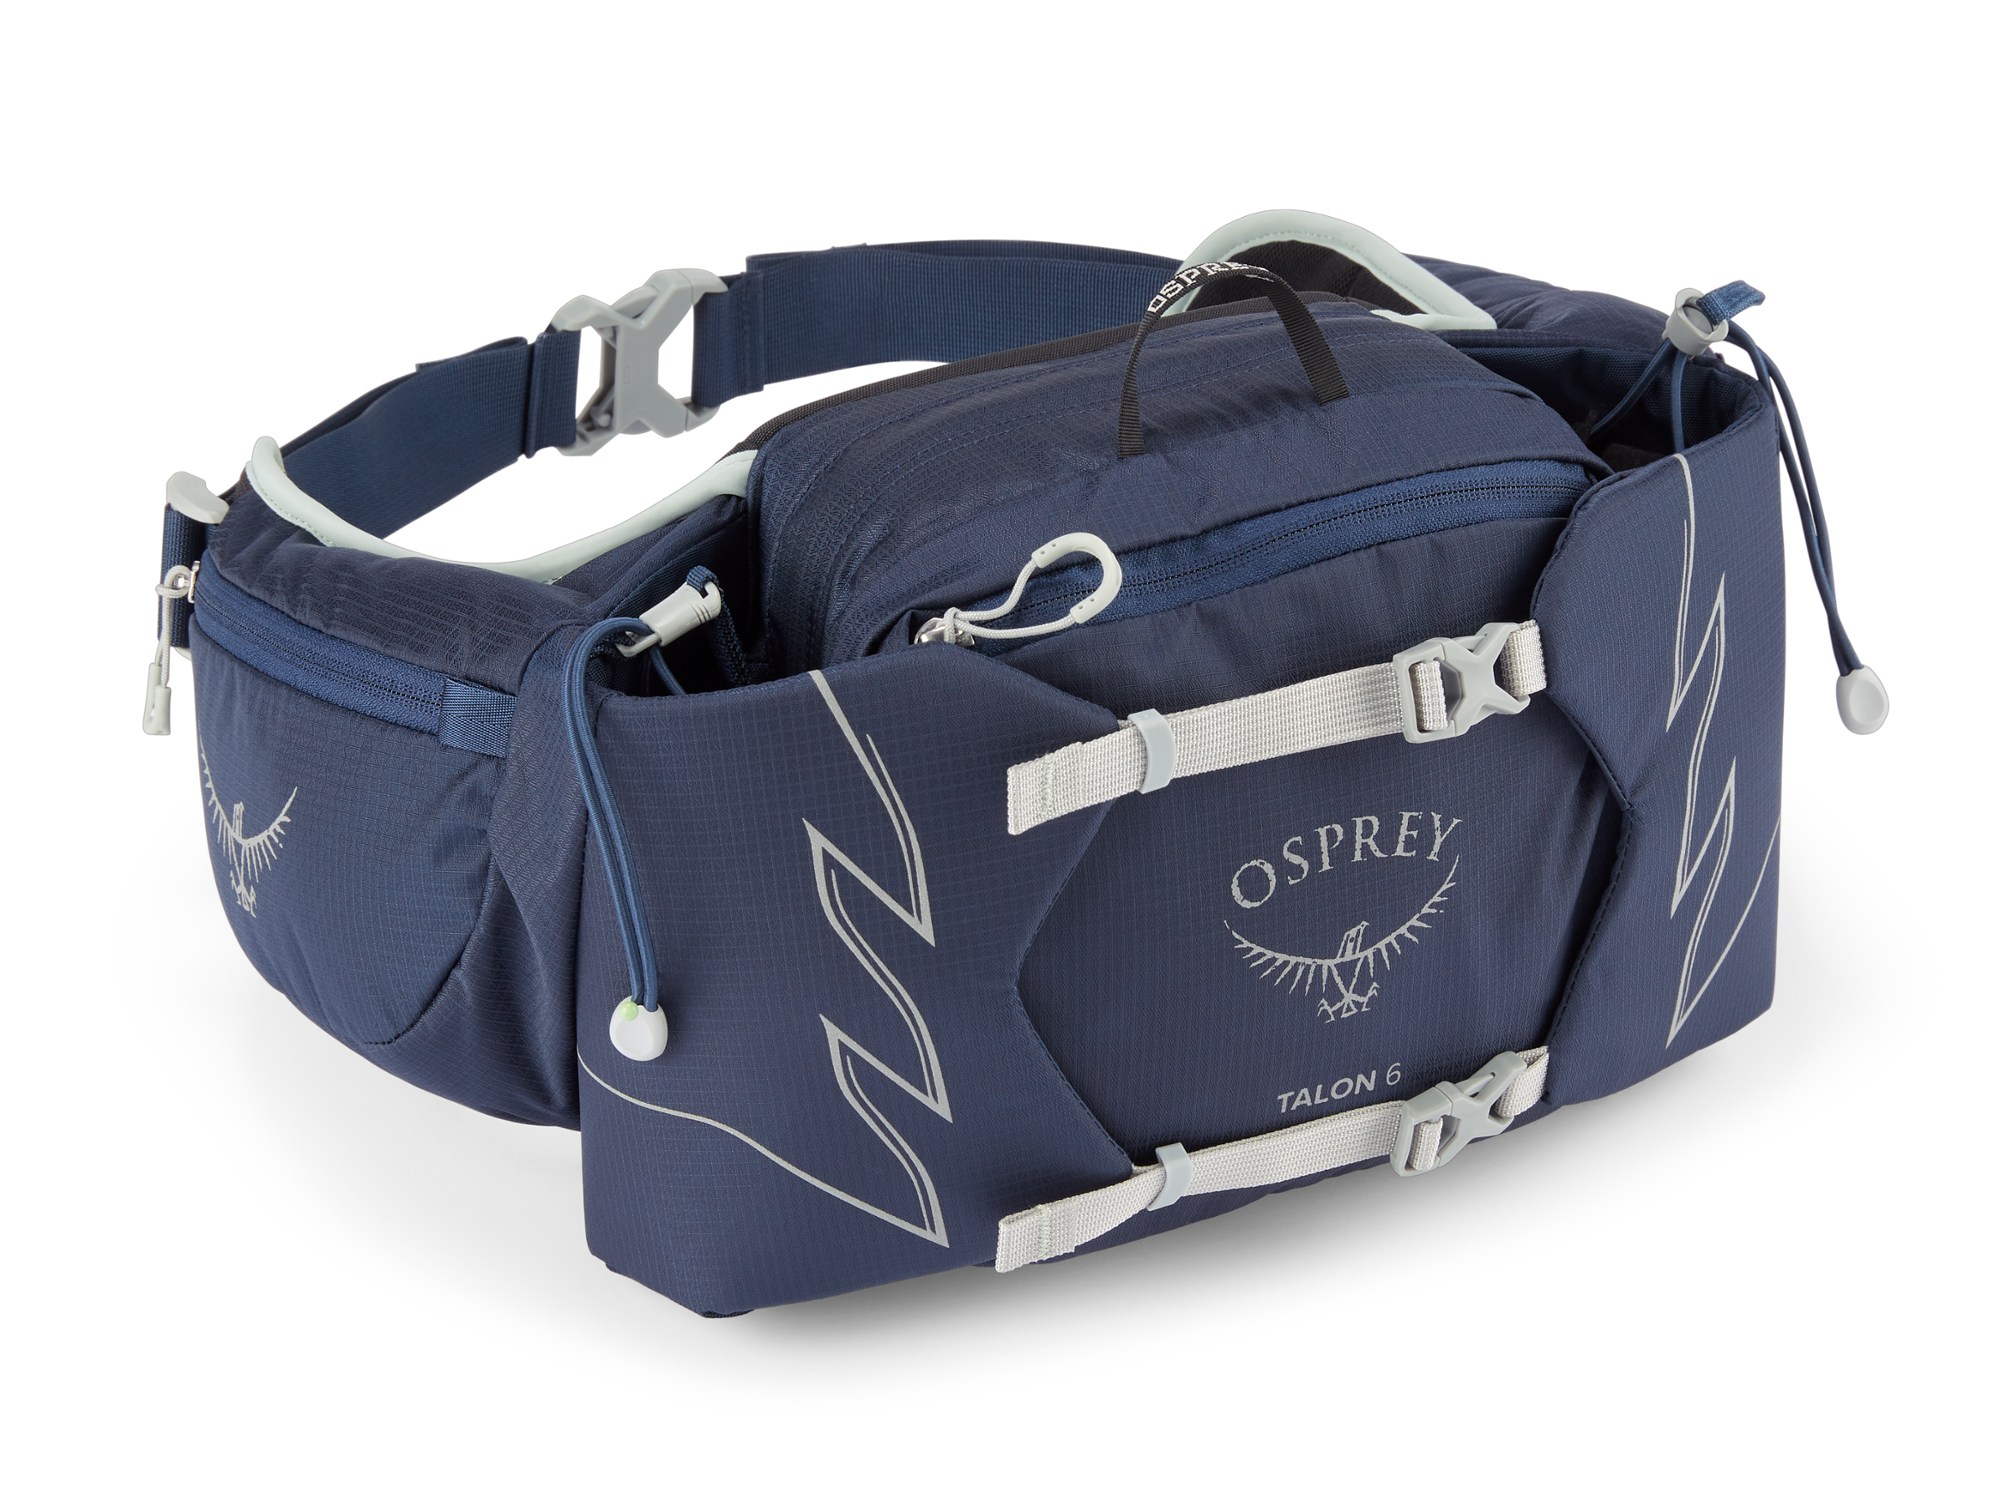 Поясная сумка Talon 6 – мужская Osprey, синий